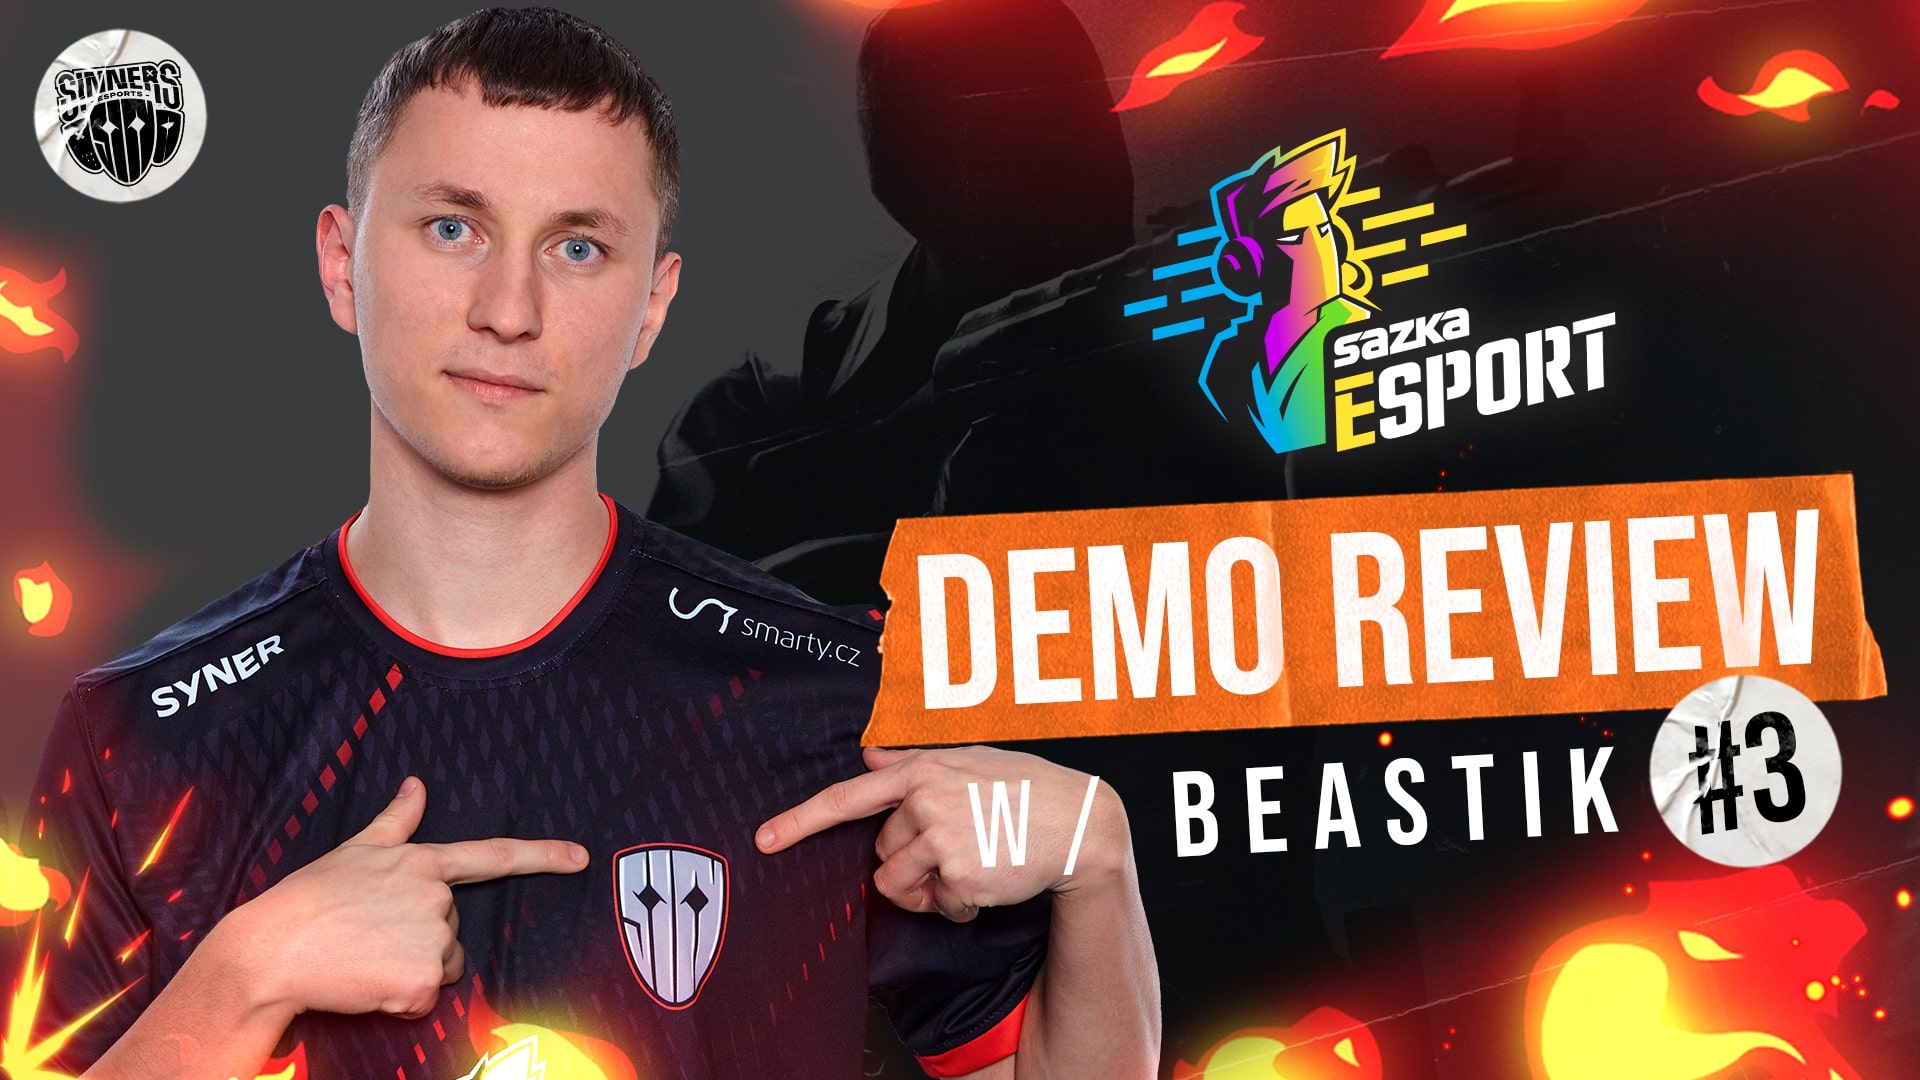 Sazka Esport Demo Review s Beastikem EP3: SINNERS a zase ti Entropiq